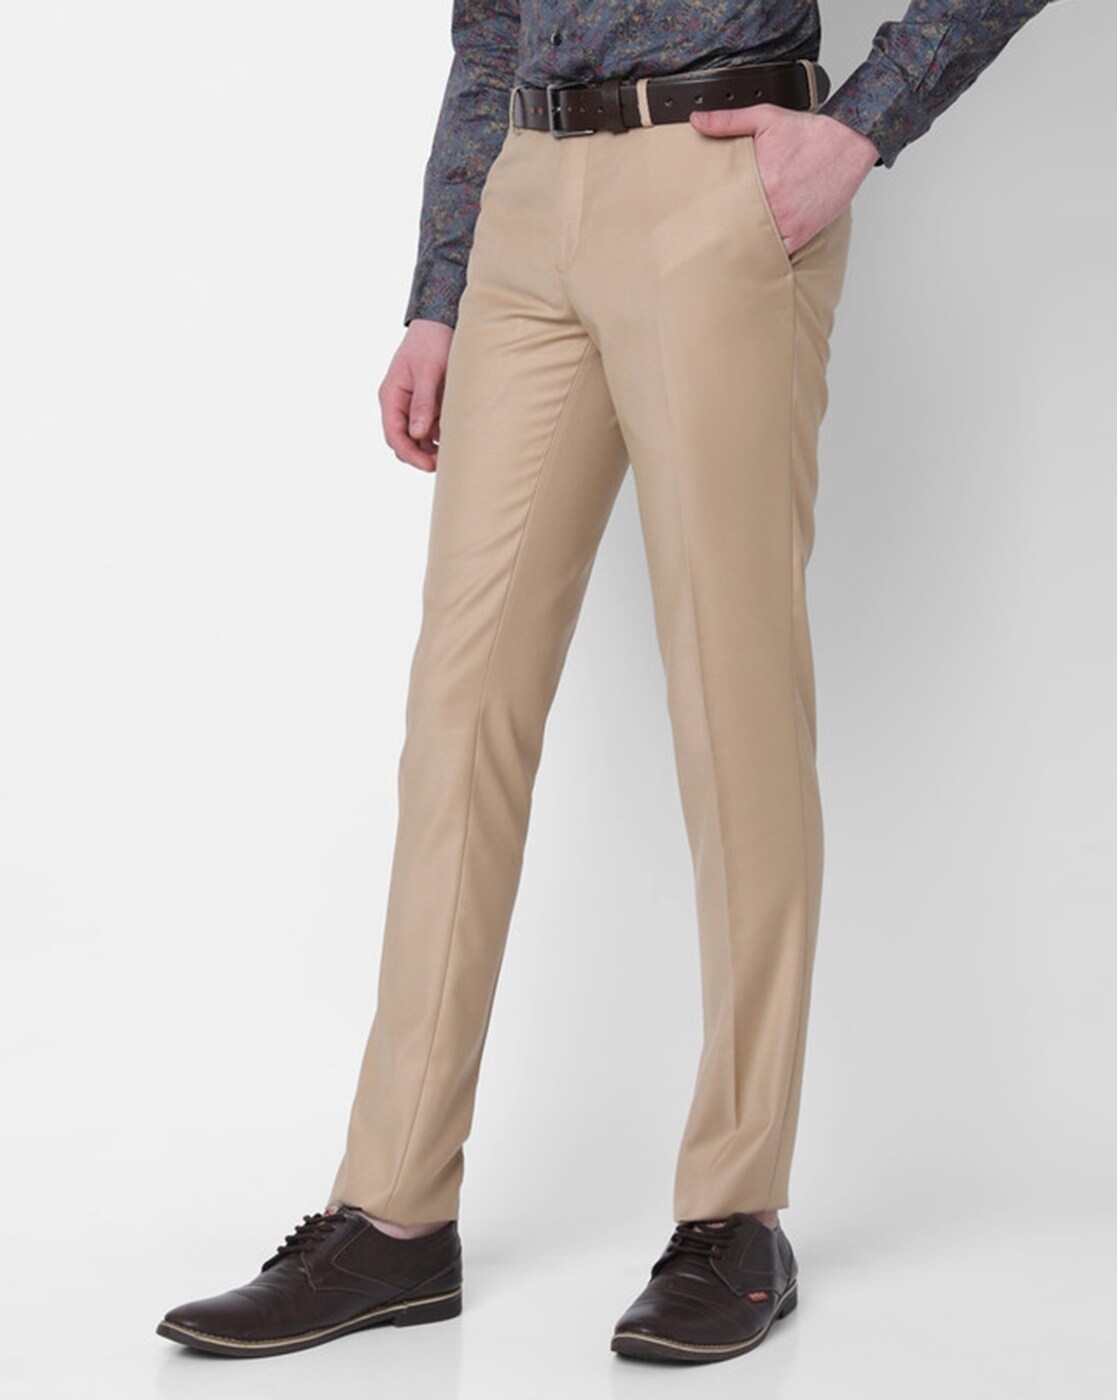 Wool Purple Suiting Fabric Windowpane Box Check Suit Jacket pants Materials  | eBay